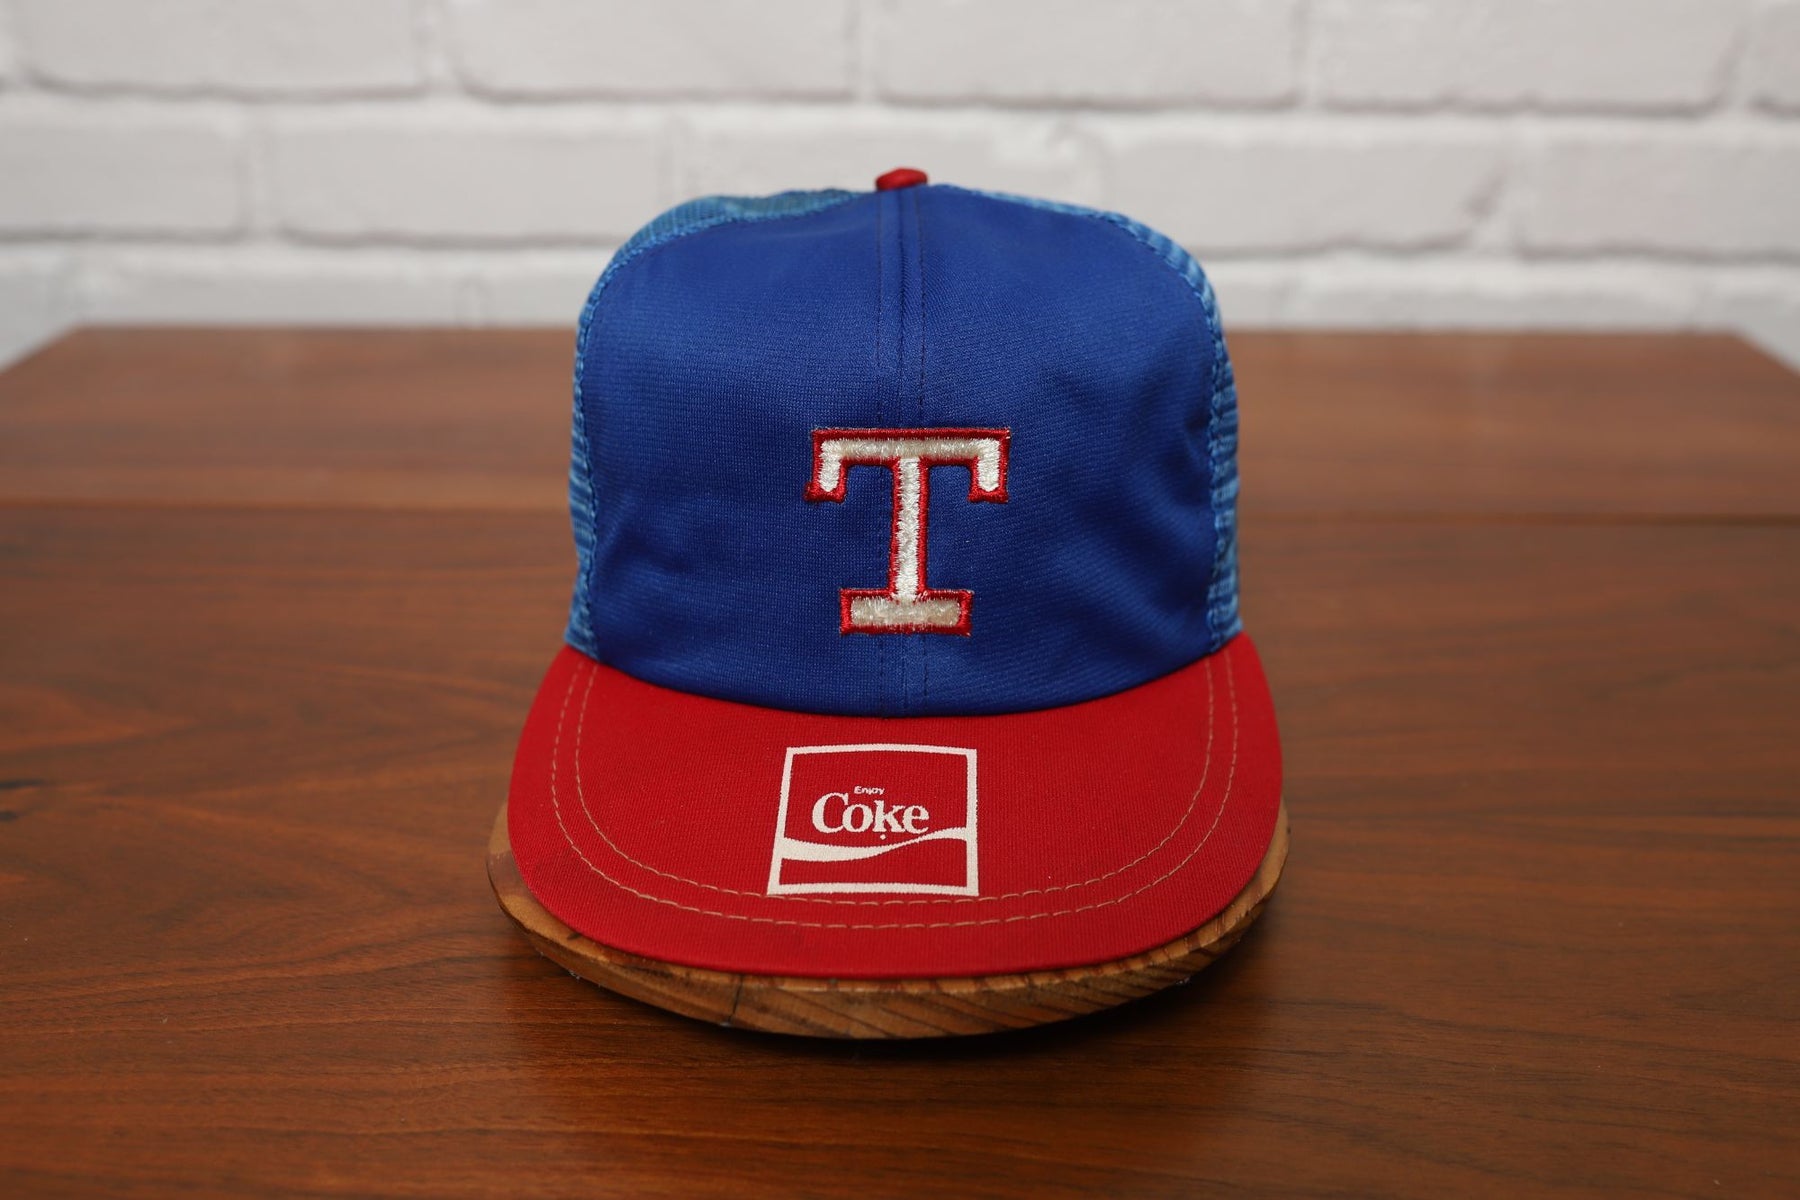 Vintage Texas Ranger Hat Cap 